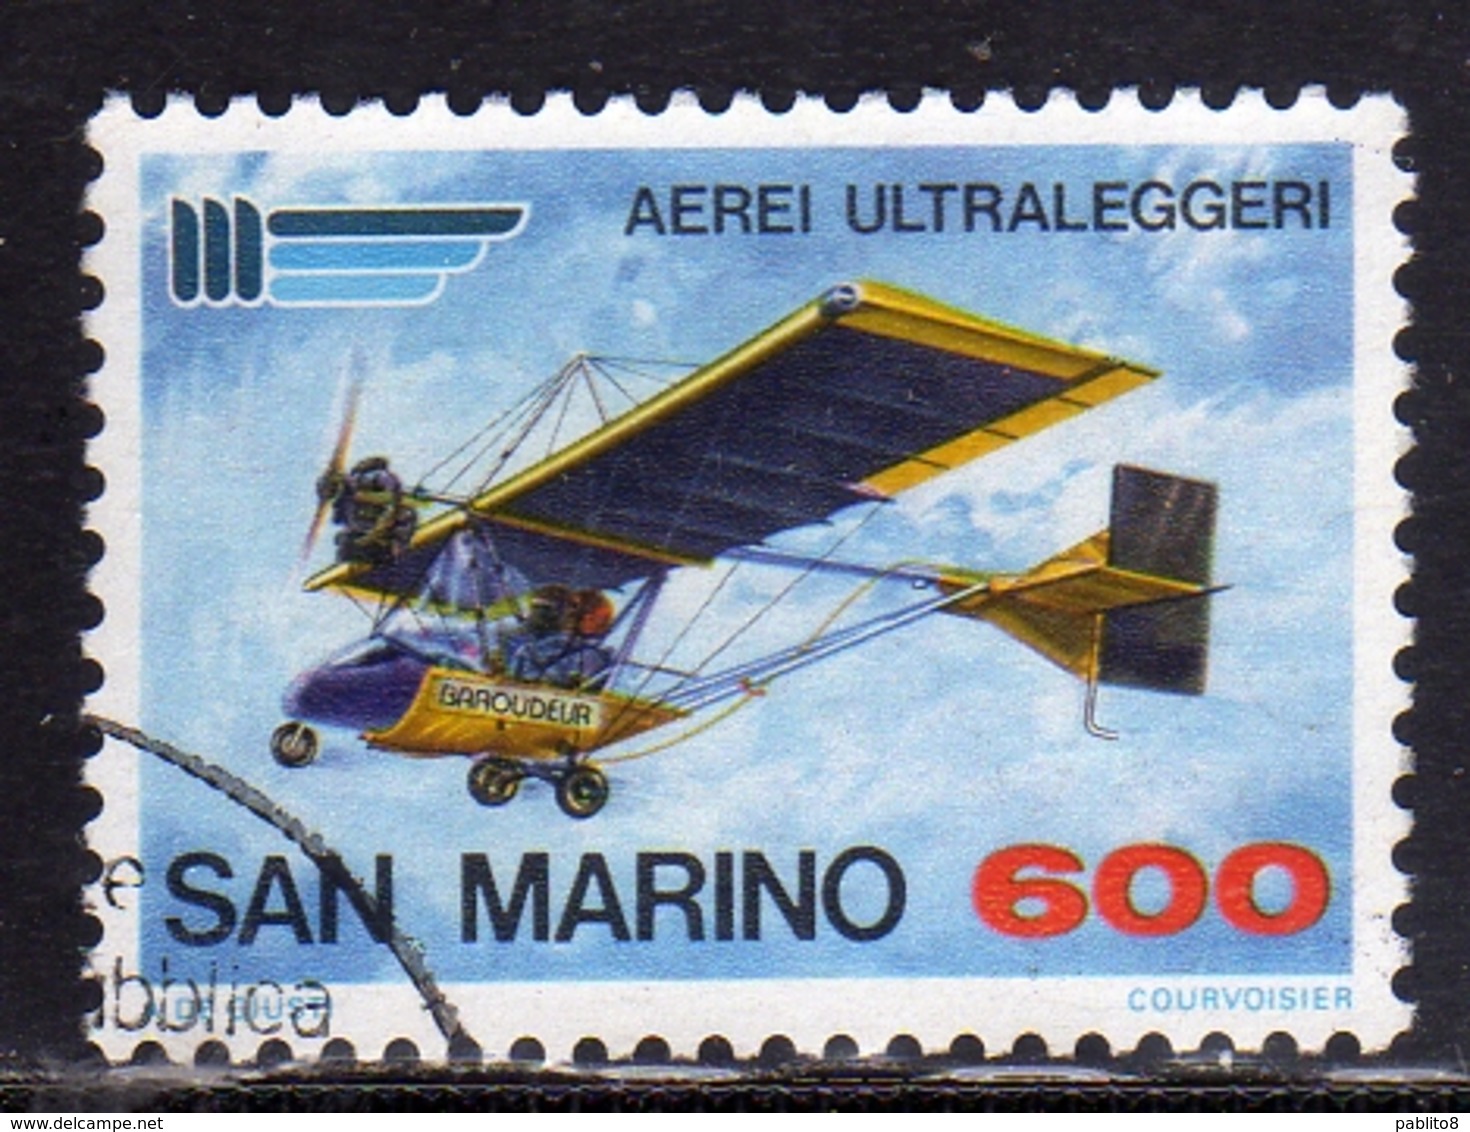 REPUBBLICA DI SAN MARINO 1987 AEREI ULTRALEGGERI ULTRA-LIGHT AIRCRAFT AÉRONEF ULTRA-LÉGER LIRE 600 USATO USED OBLITERE' - Usados